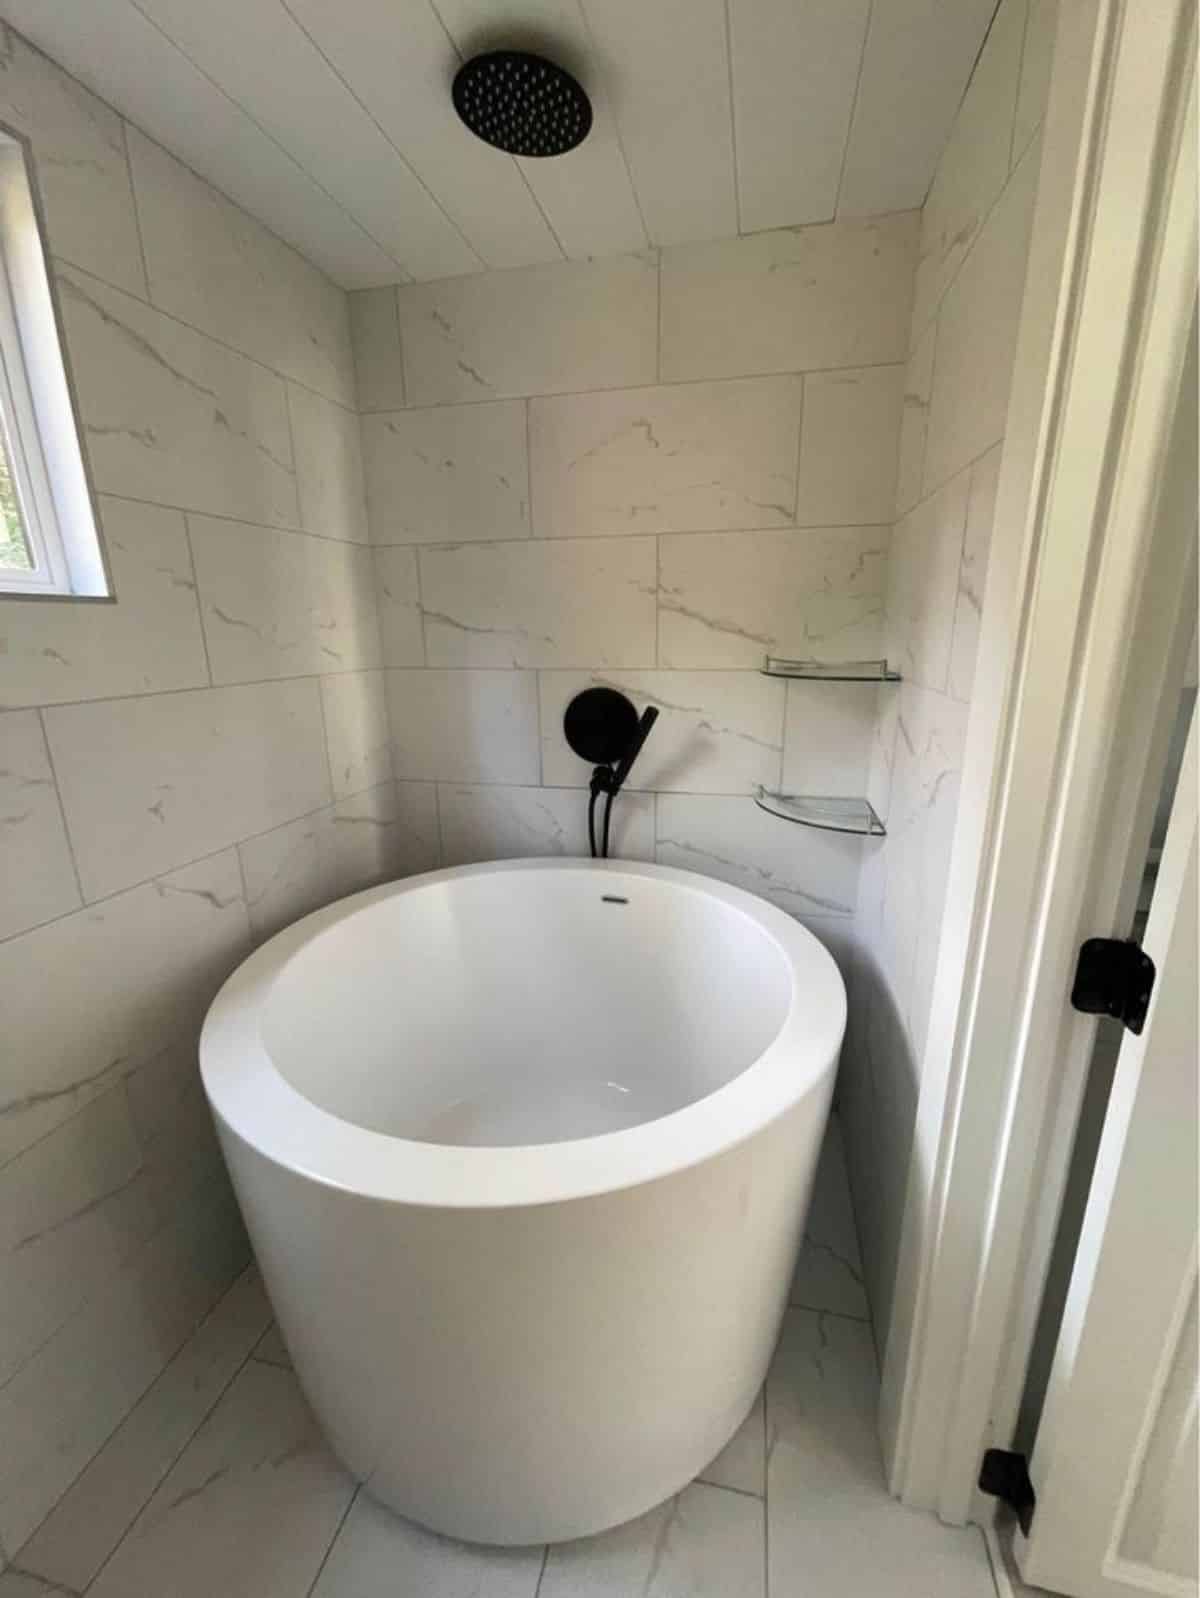 Huge bathtub with shower in bathroom